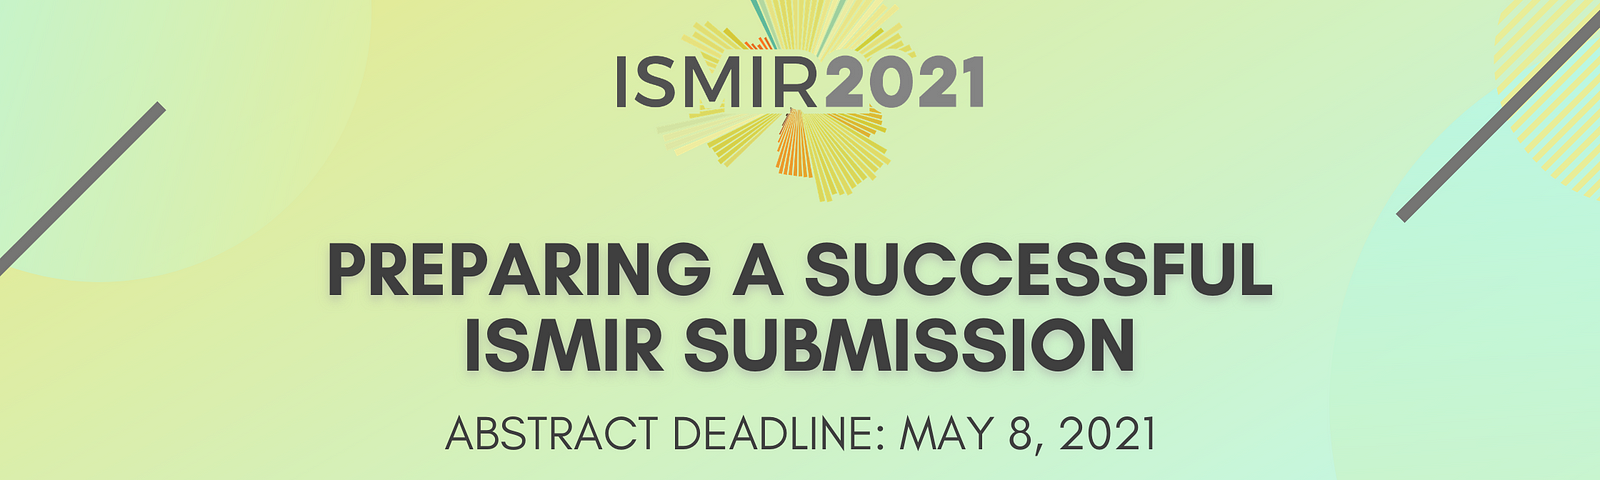 ISMIR2021 Blog: Preparing a Successful ISMIR Submission